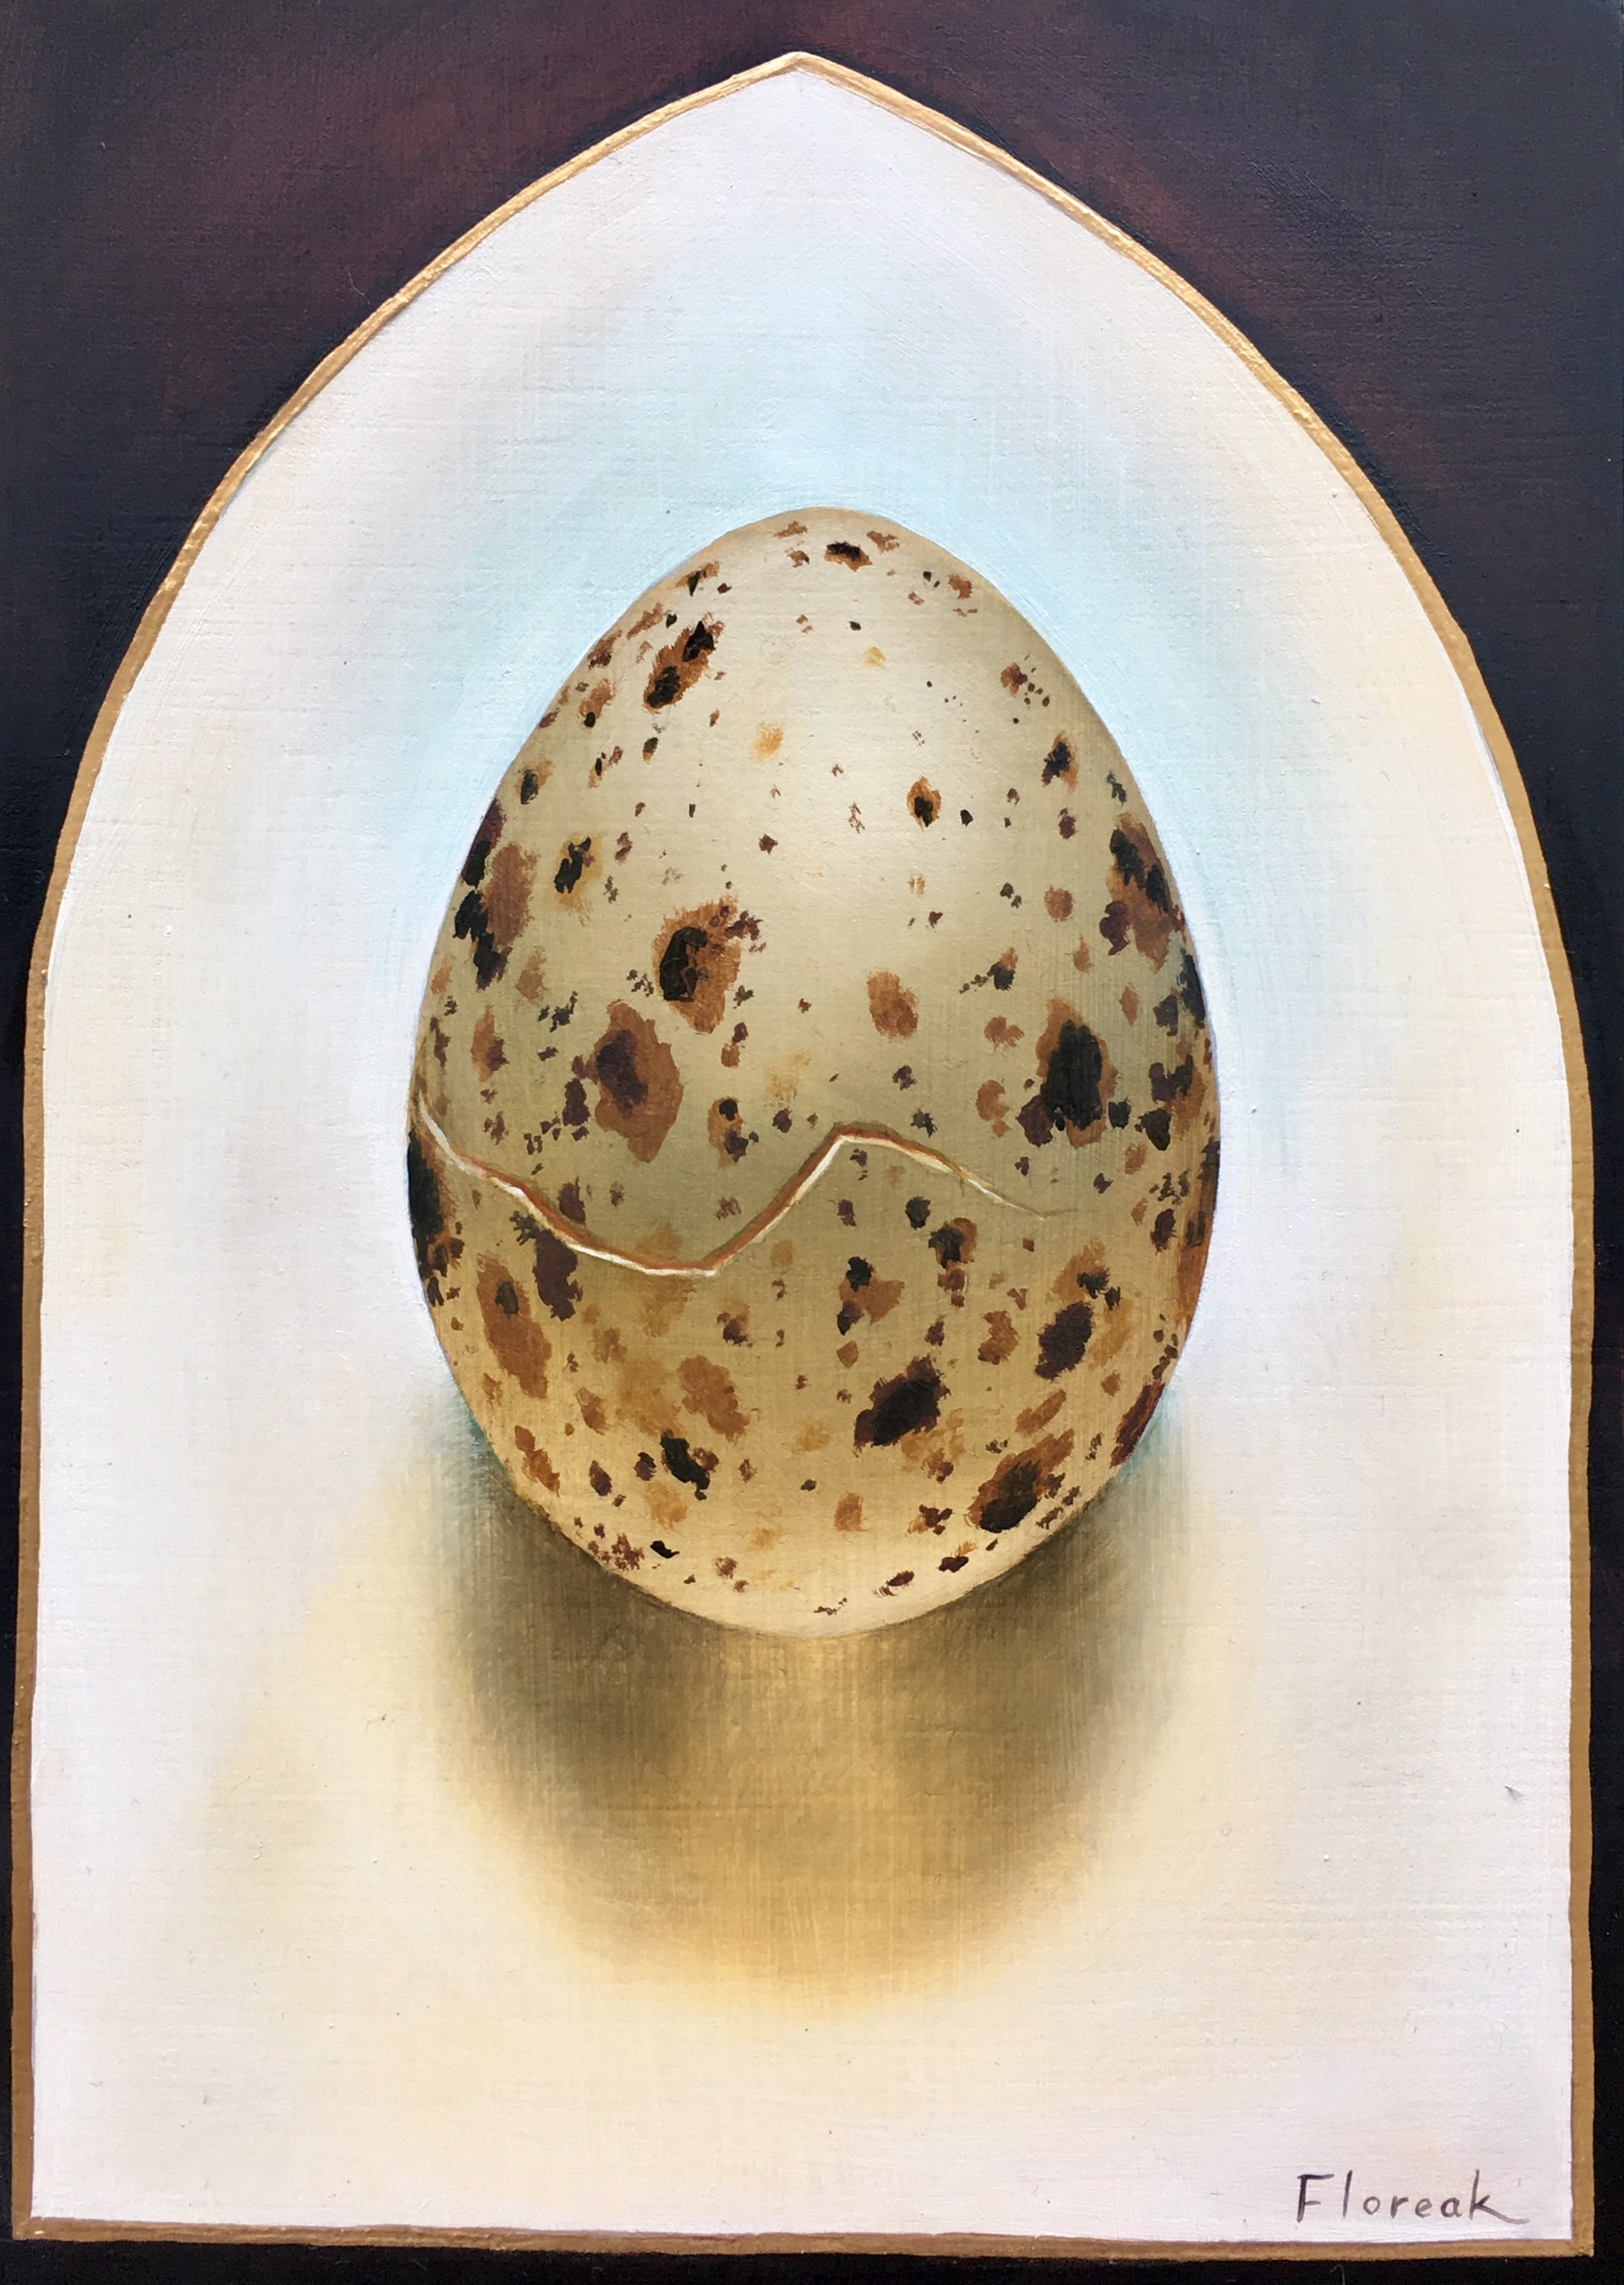 Egg/Cathedral by Ida Floreak